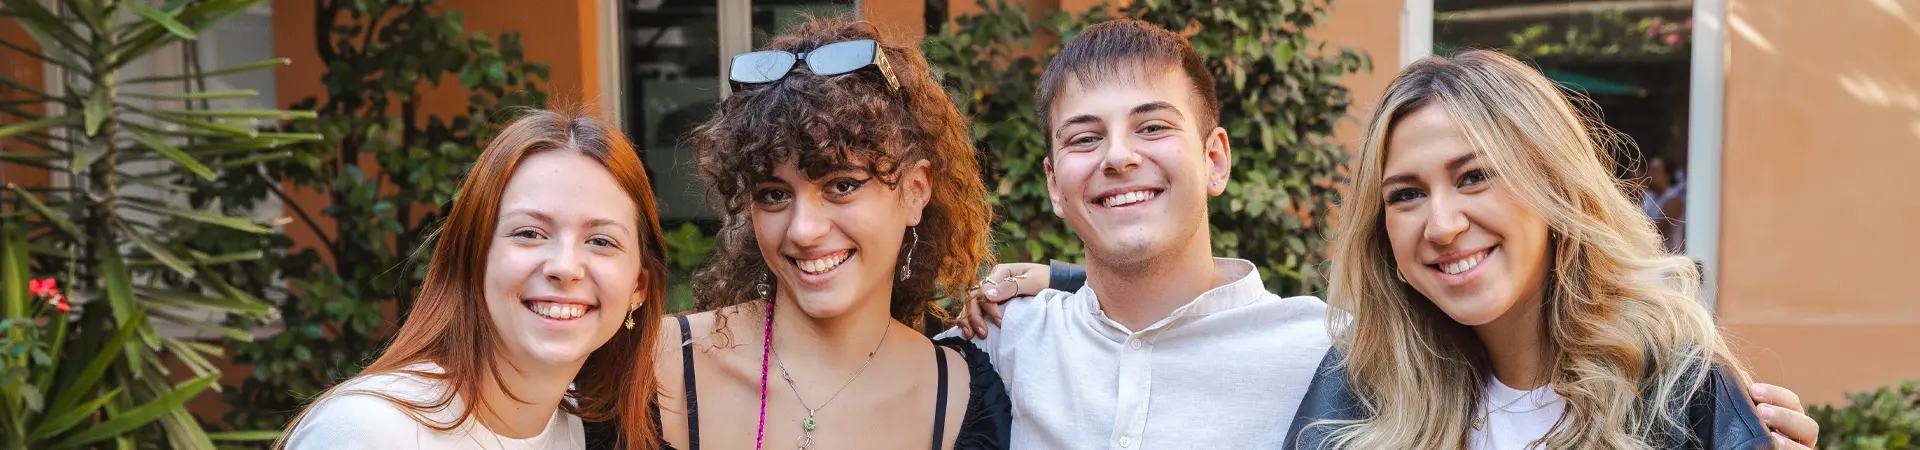 Meet Your Student Ambassadors | Study in Rome at JCU